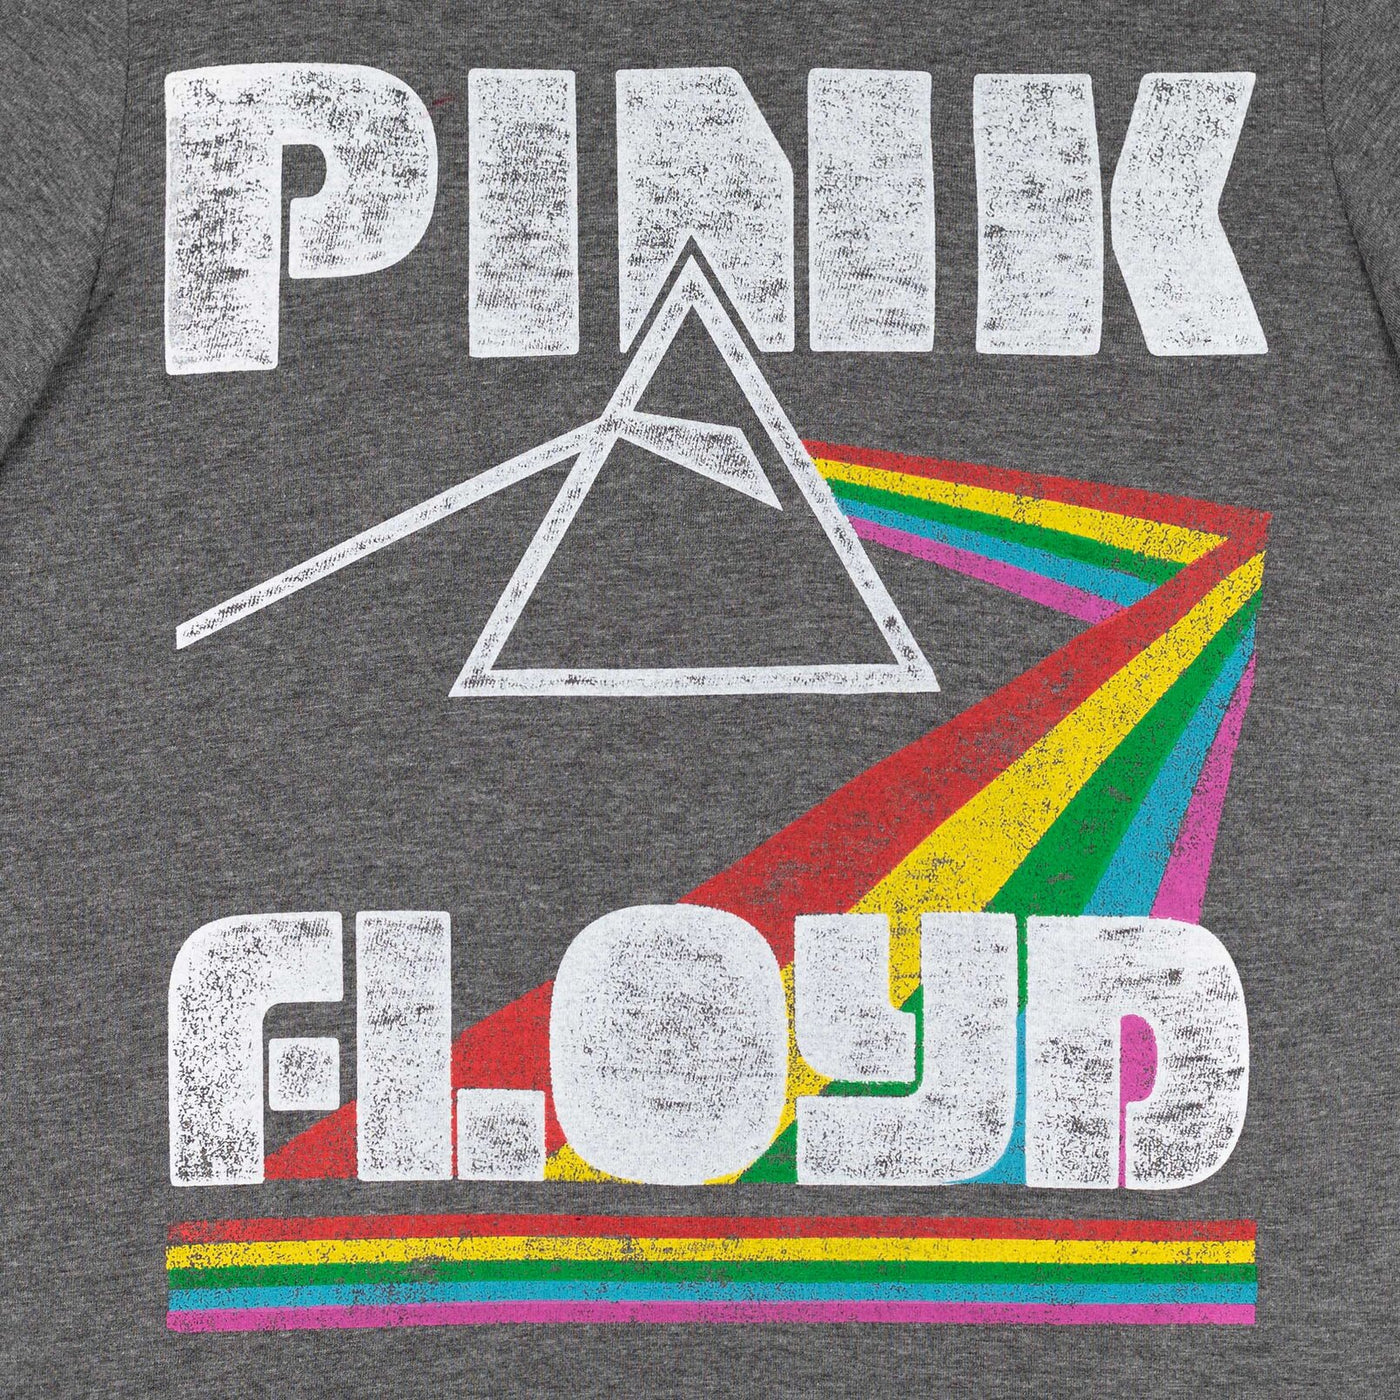 Pack de 2 Pink Floyd Camisetas gráficas